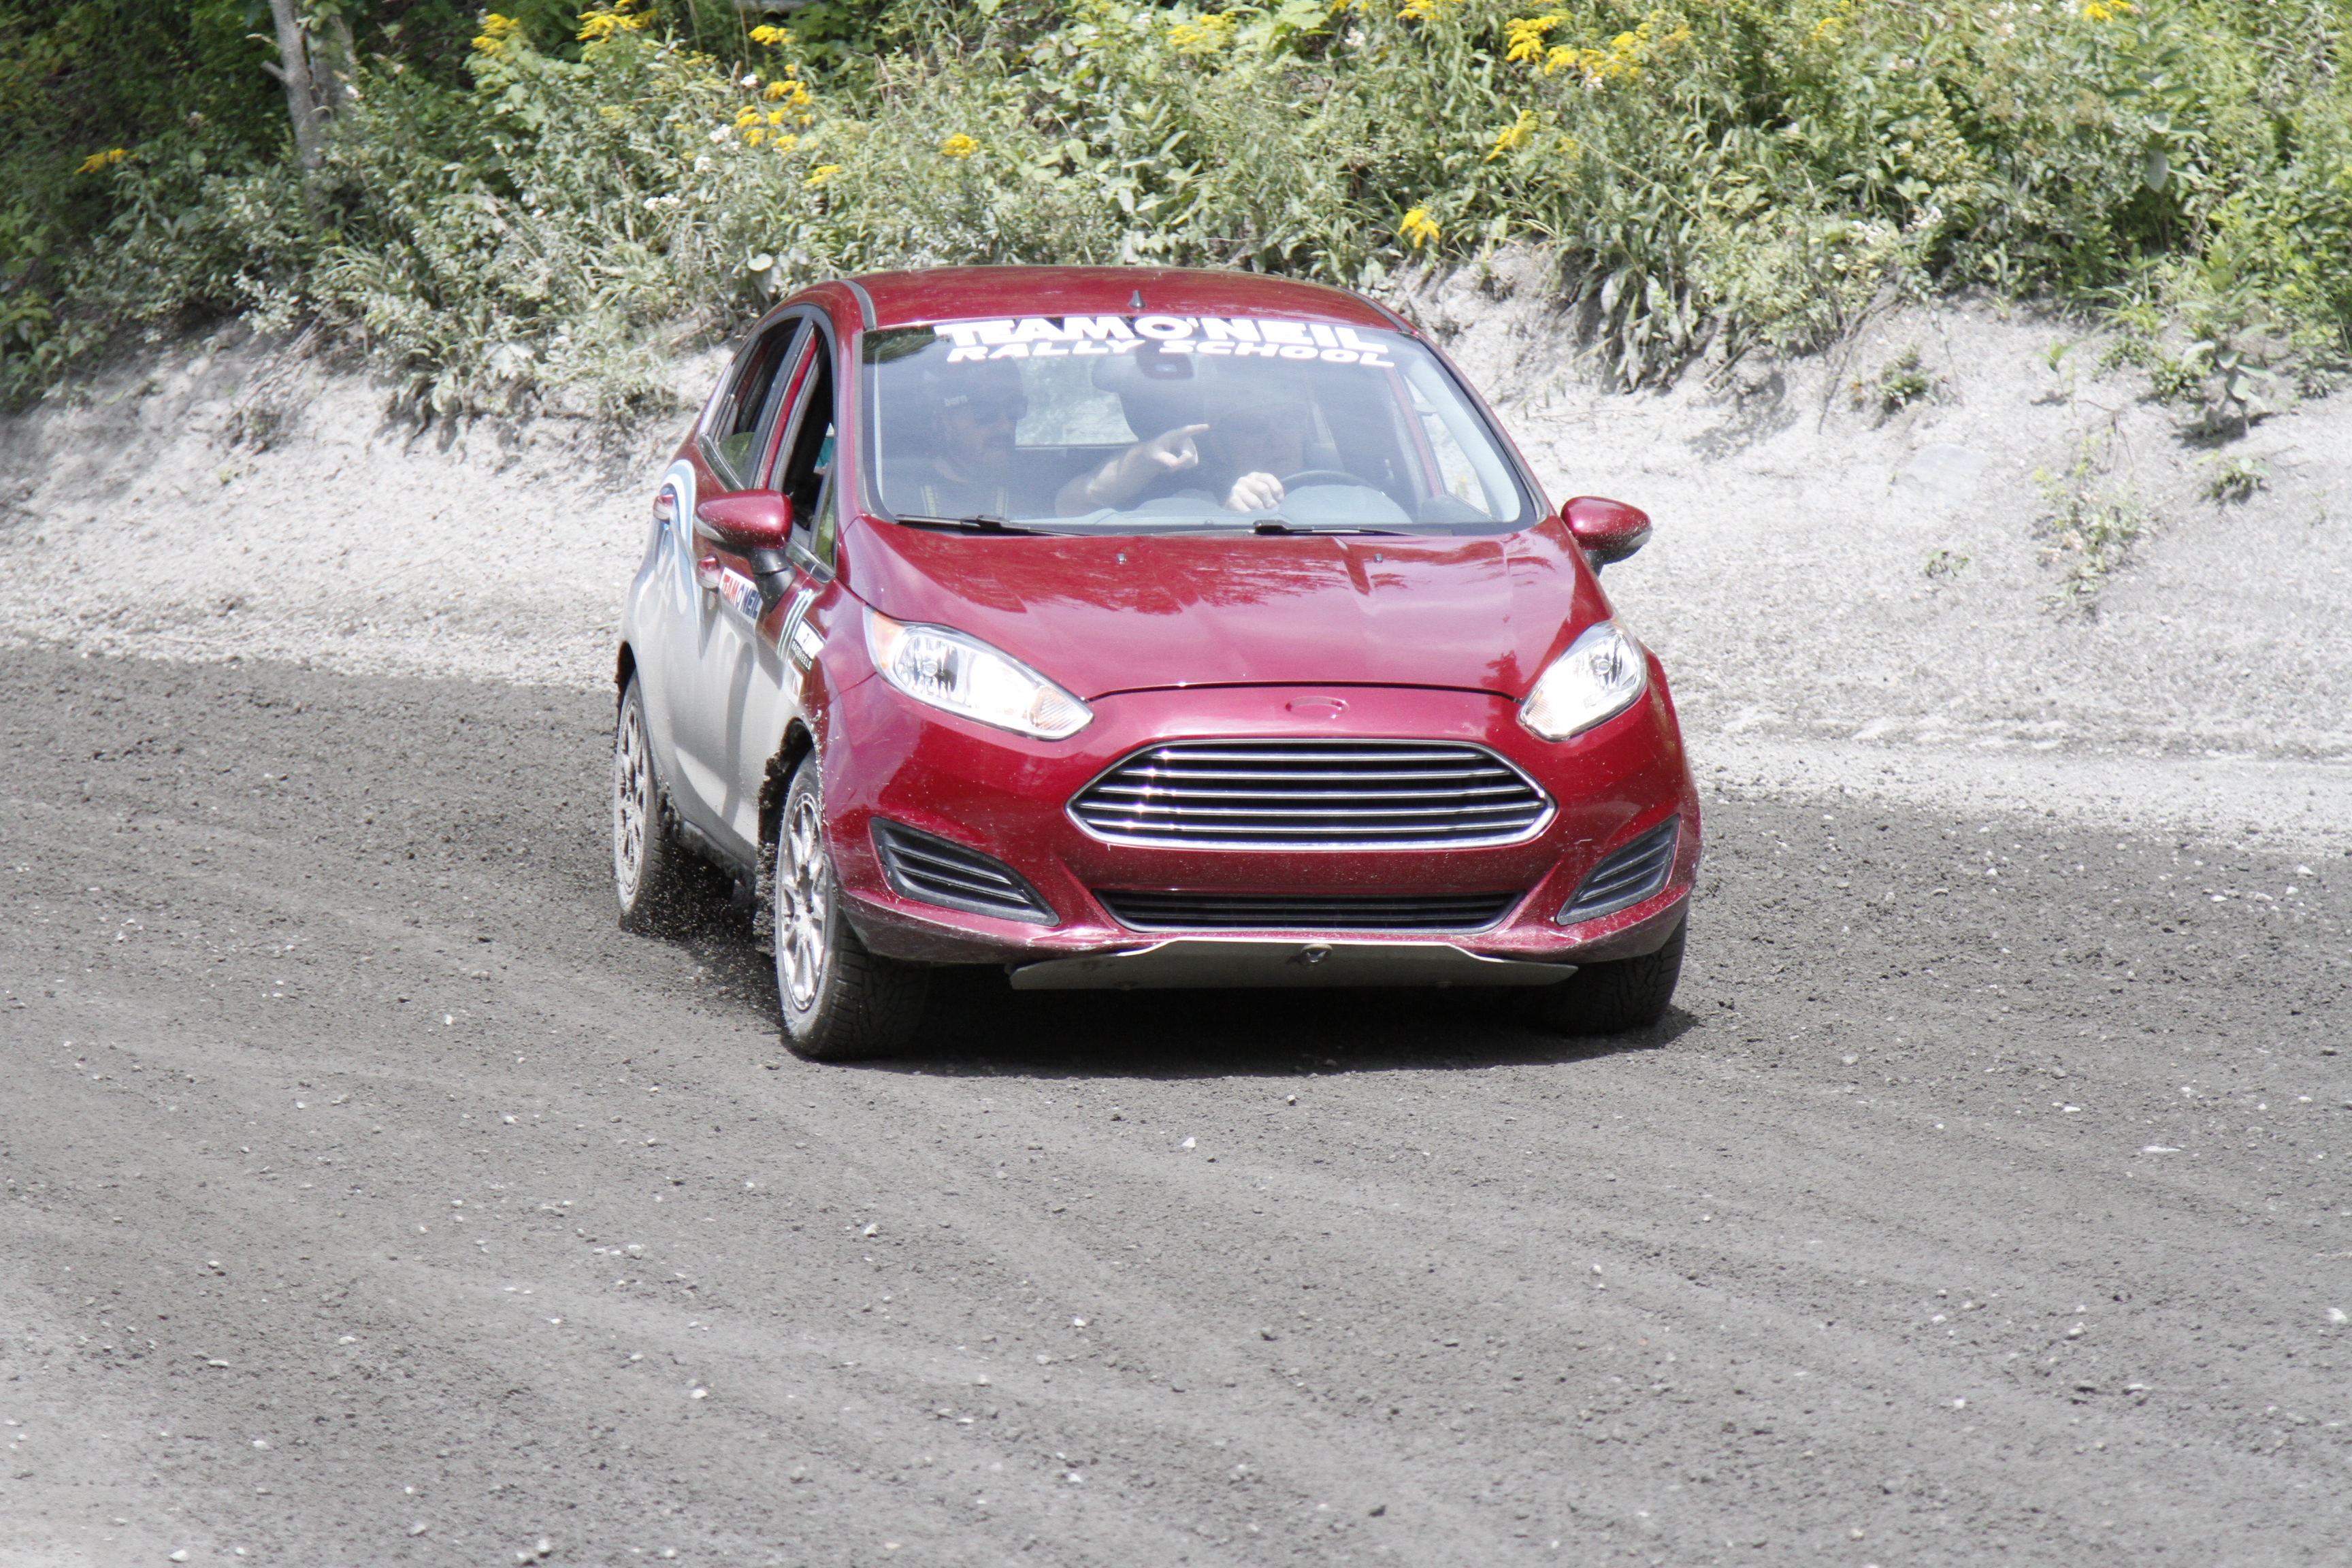 Ford Fiesta navigating a dirt rally road.